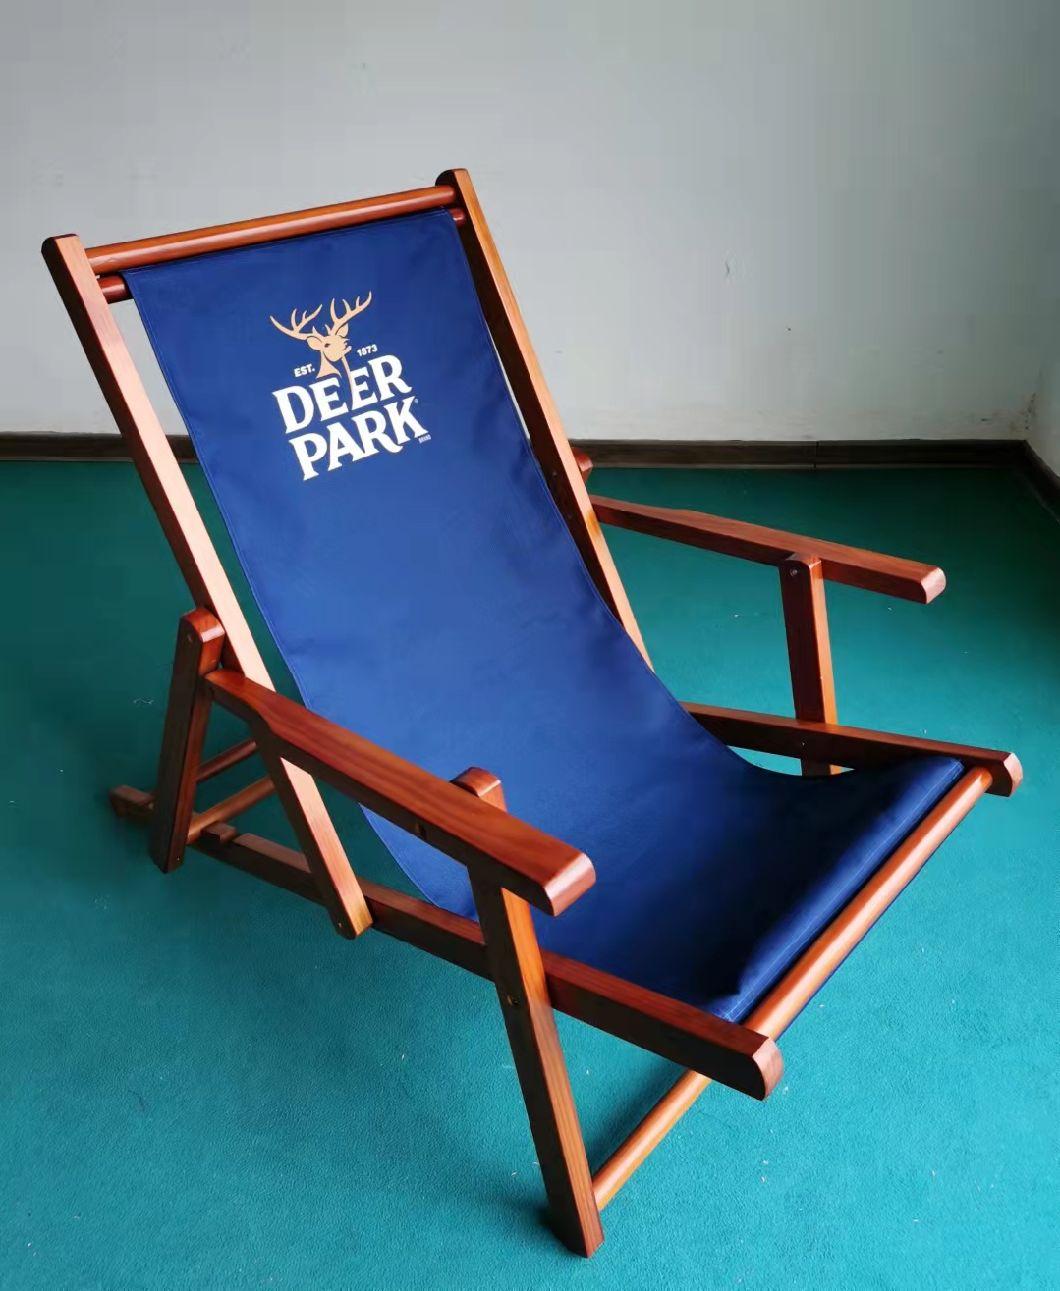 Outdoor Wood Folding Relaxing Lounge Recliner Beach Chair